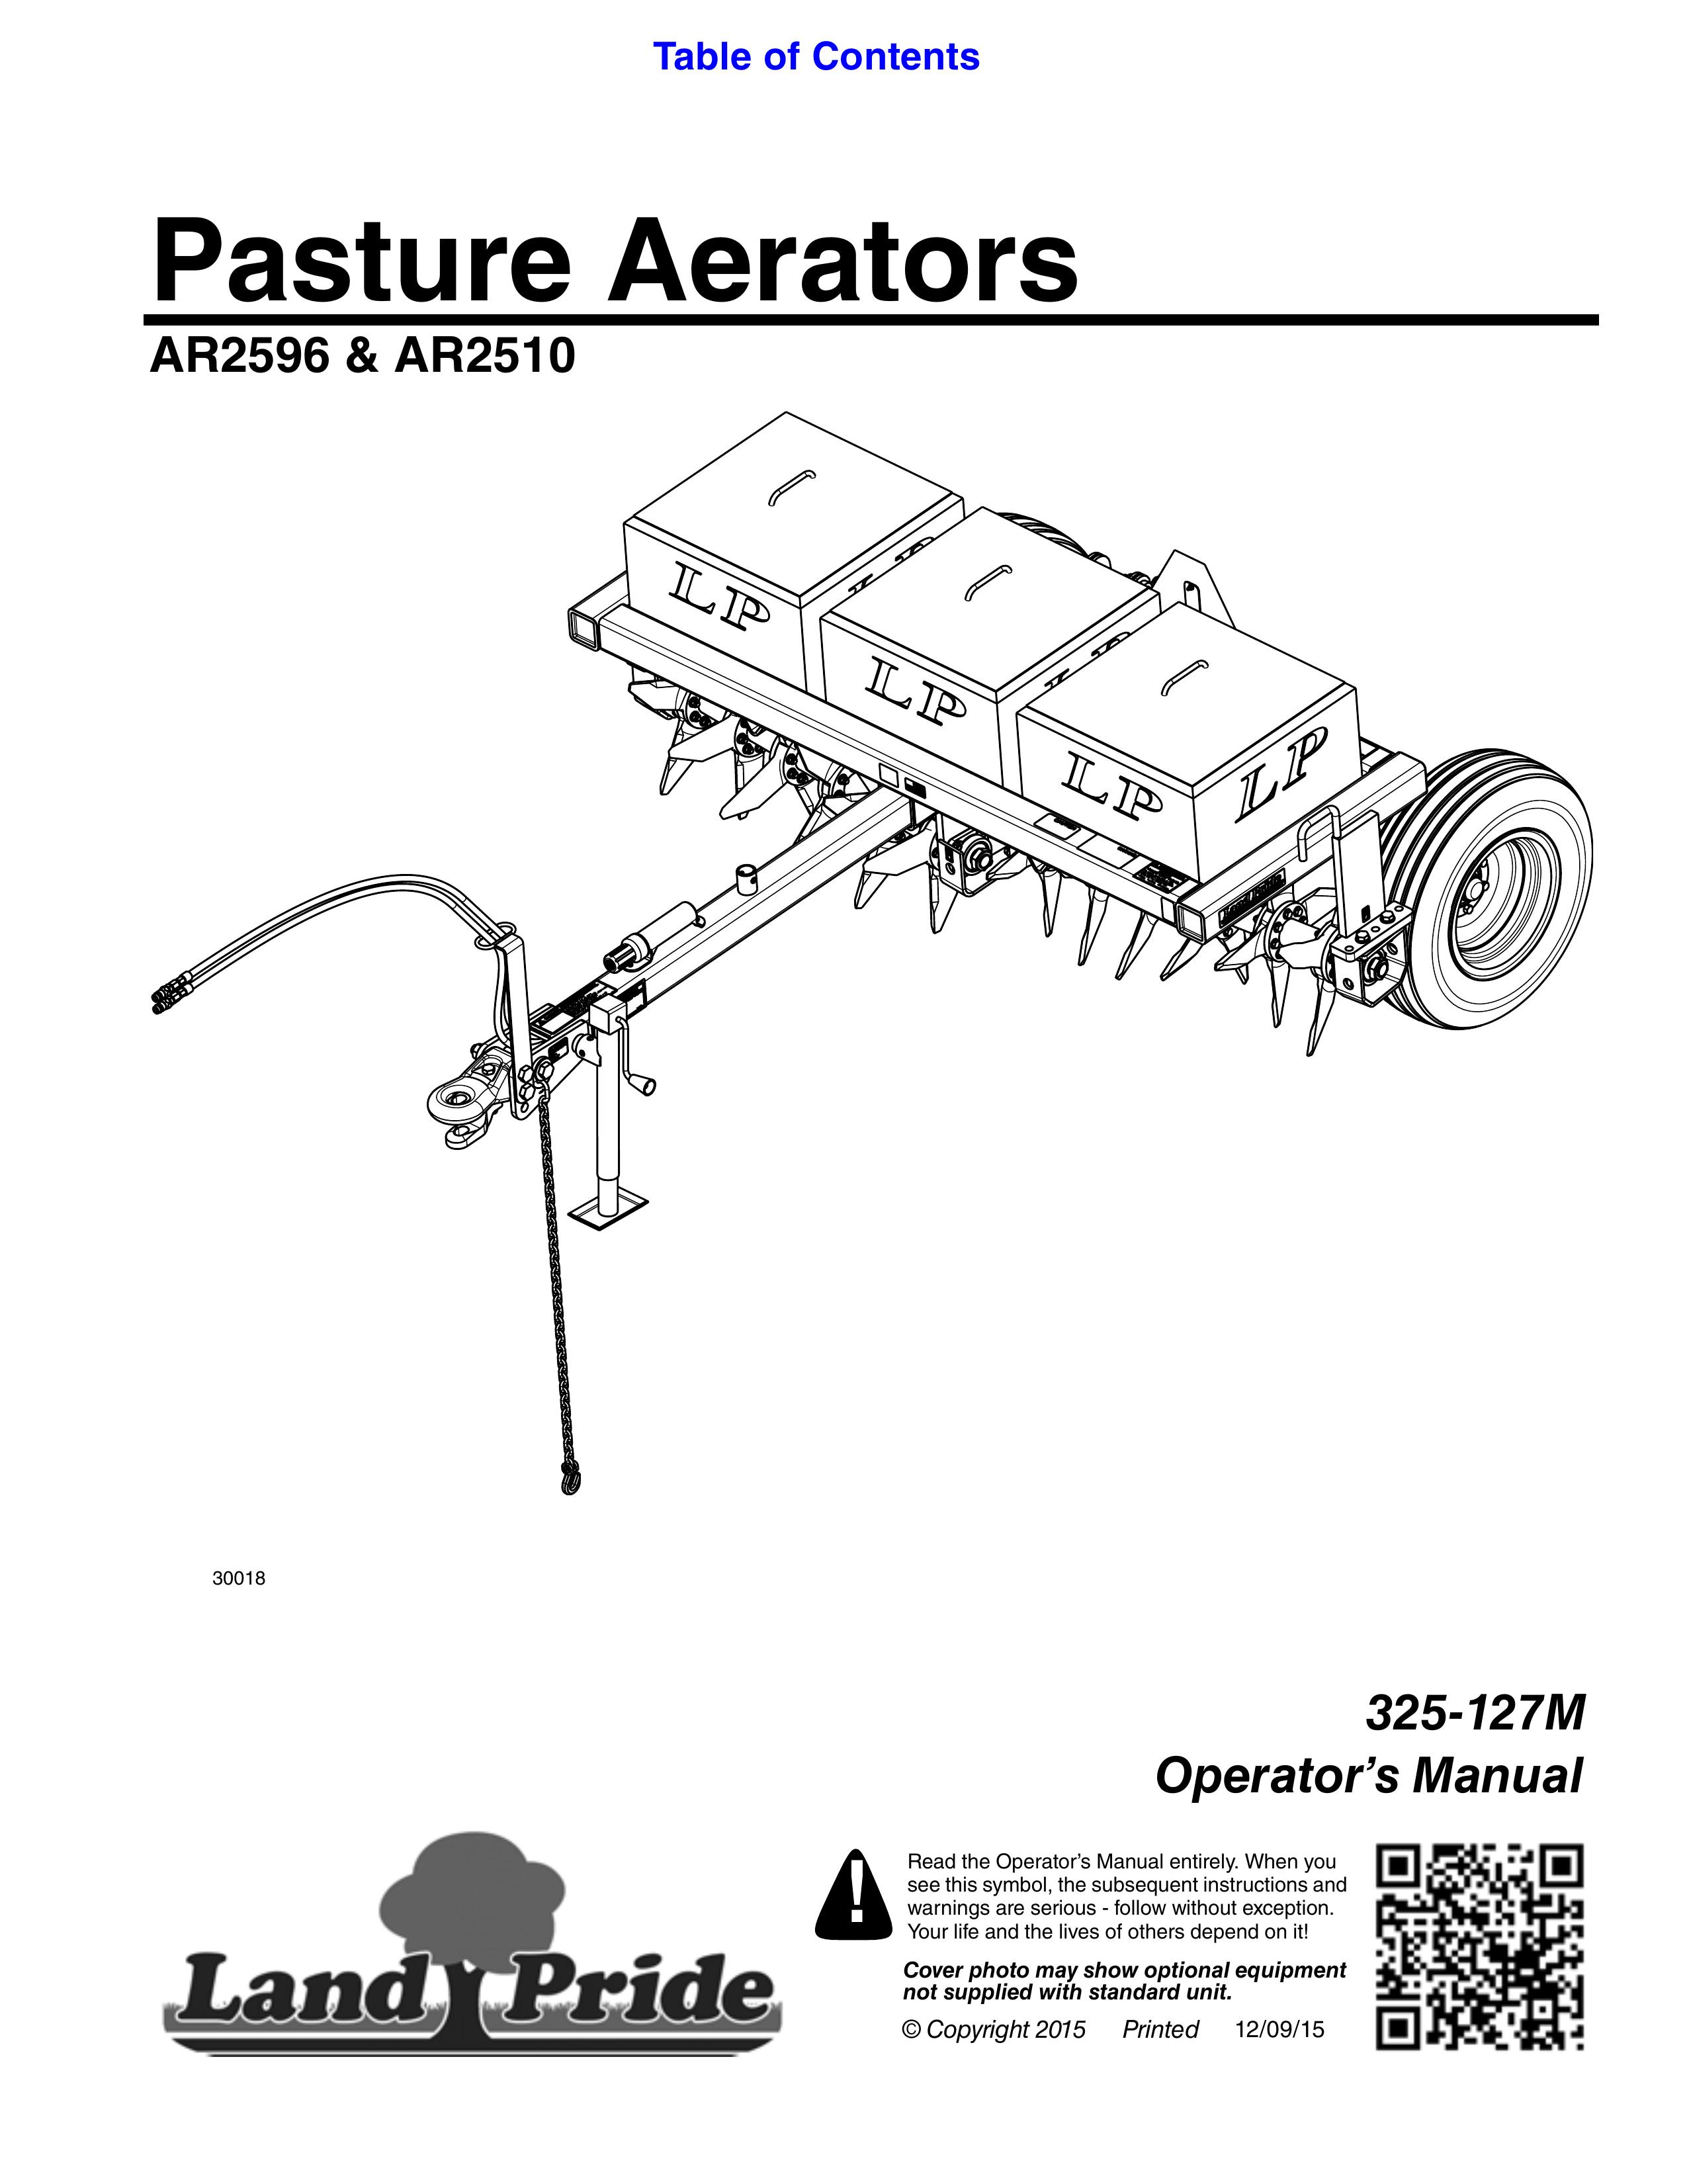 Land Pride AR2596 Lawn Aerator User Manual